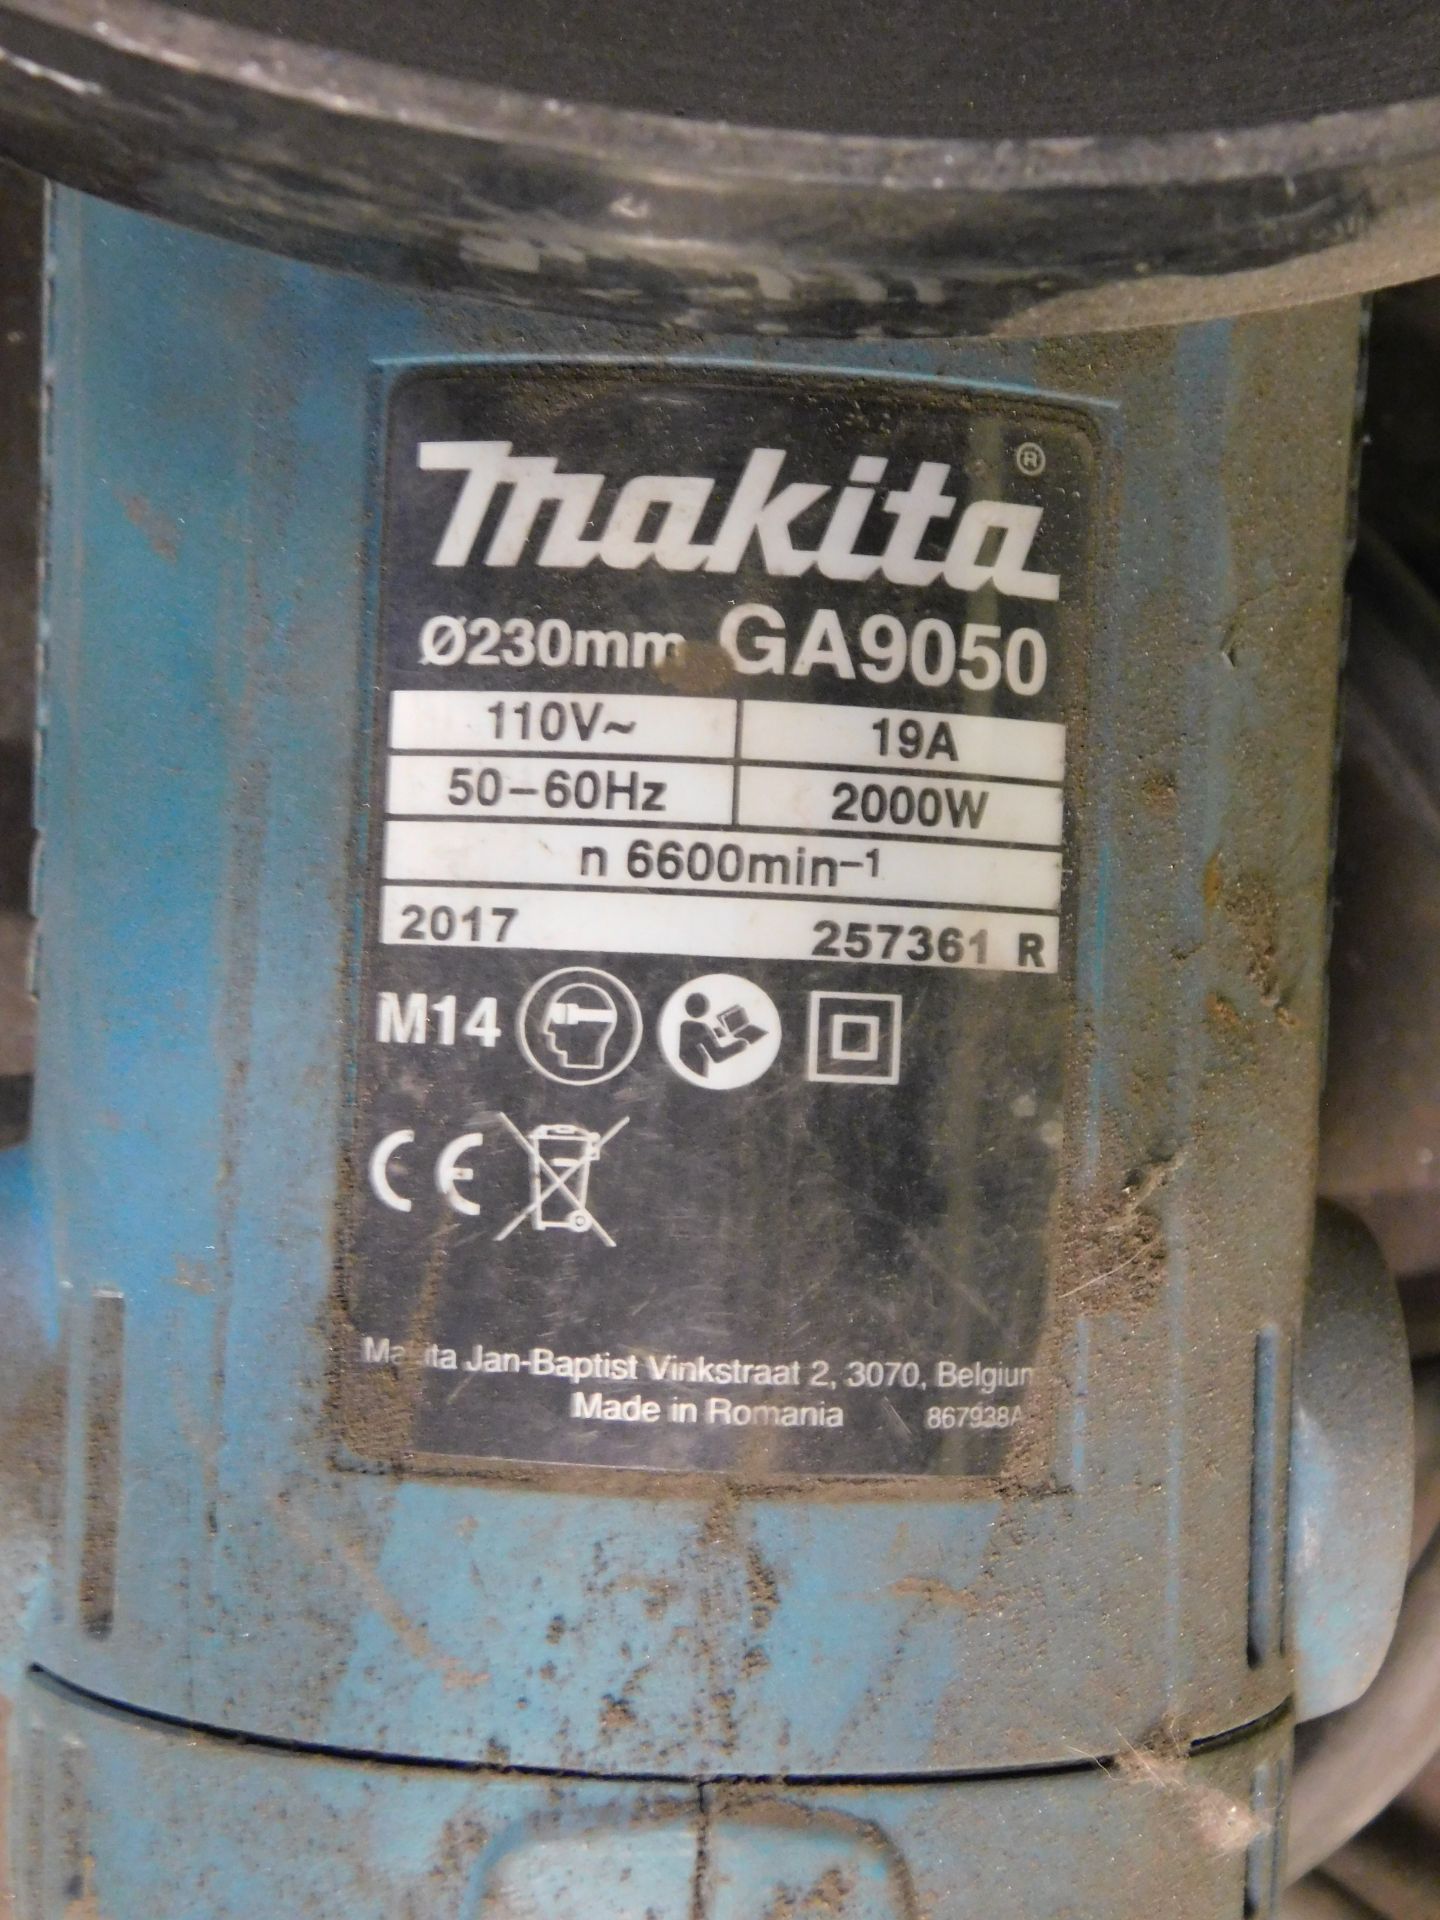 Makita GA9050 230mm Angle Grinder & Hitachi Hammer Drill, Both 110v (Location: Tottenham. Please - Image 3 of 3